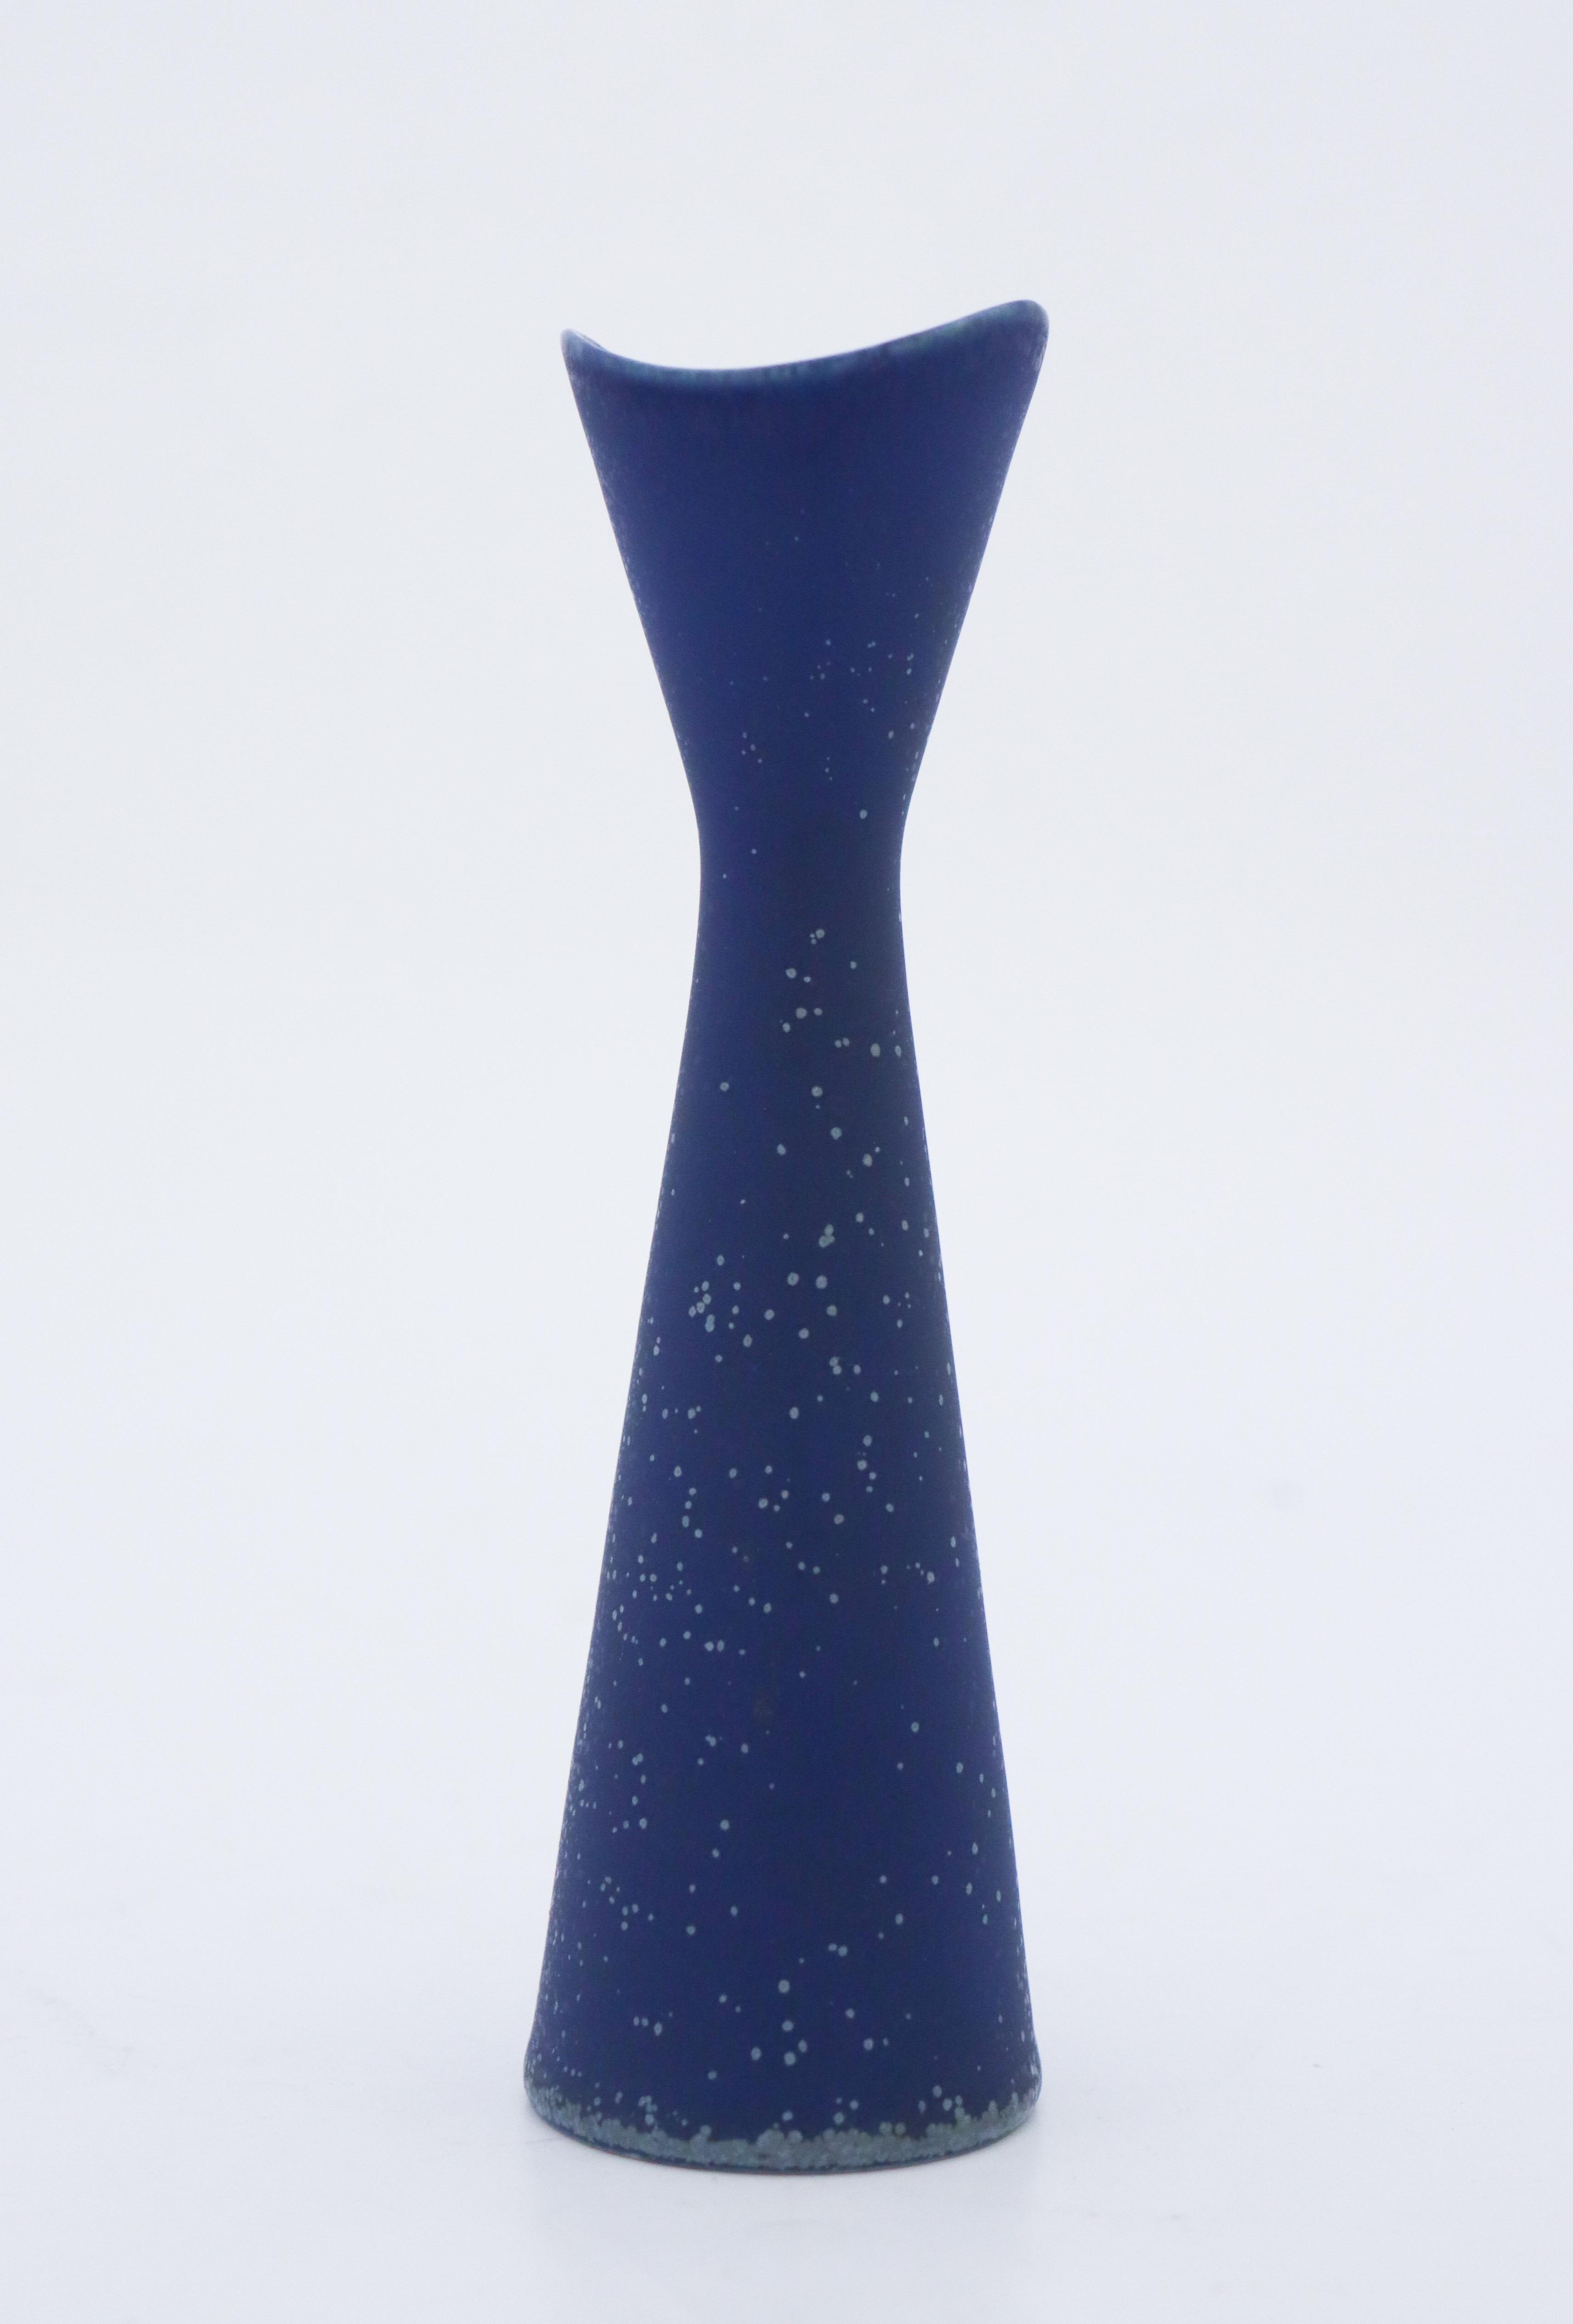 Scandinave moderne Vase bleu, Gunnar Nylund, Nymlle, années 1960 en vente